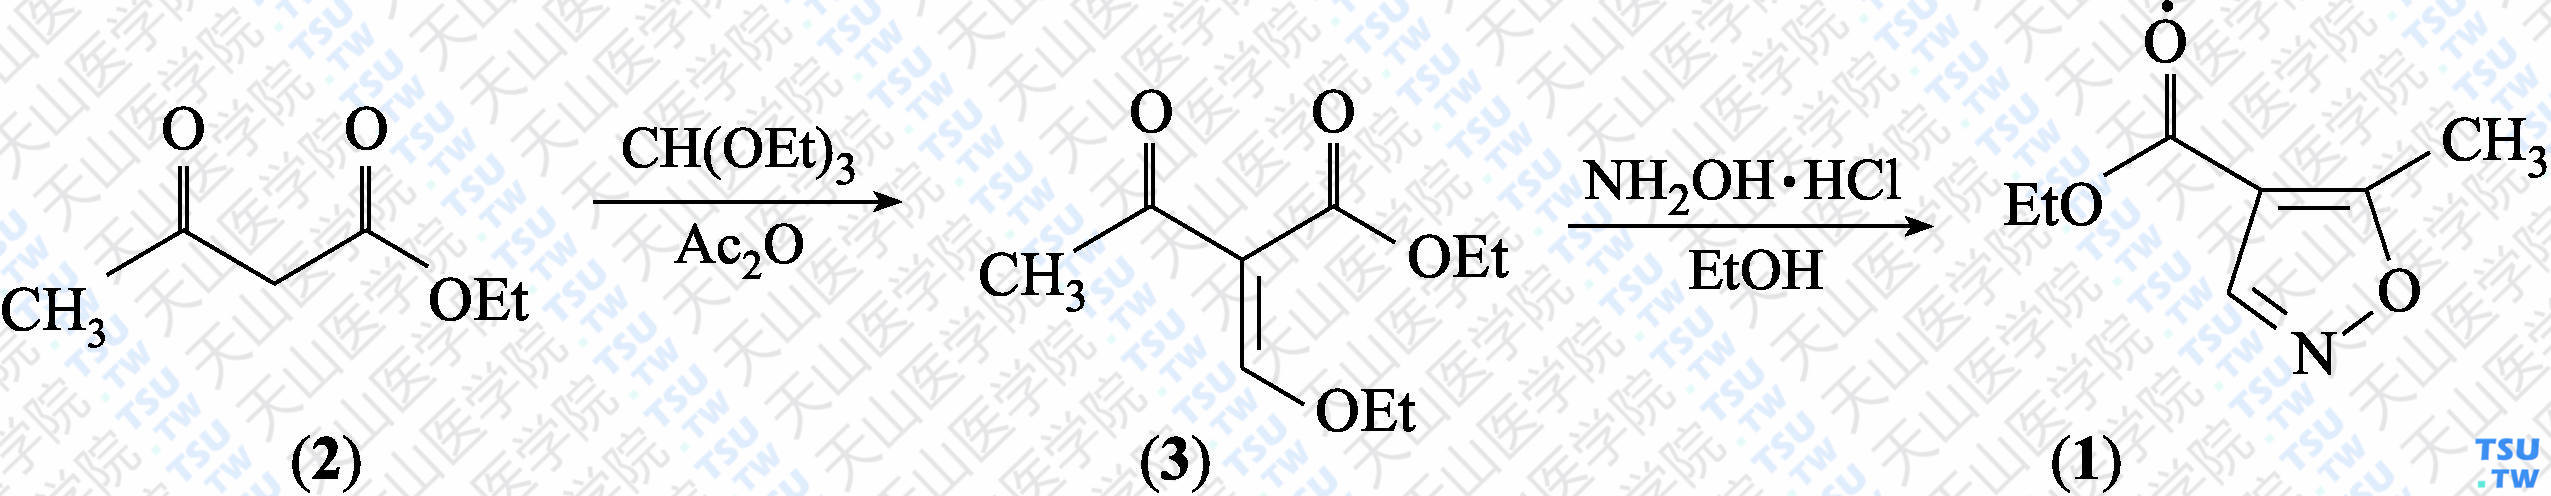 5-甲基-4-异噁唑甲酸乙酯（分子式：C<sub>7</sub>H<sub>9</sub>NO<sub>3</sub>）的合成方法路线及其结构式